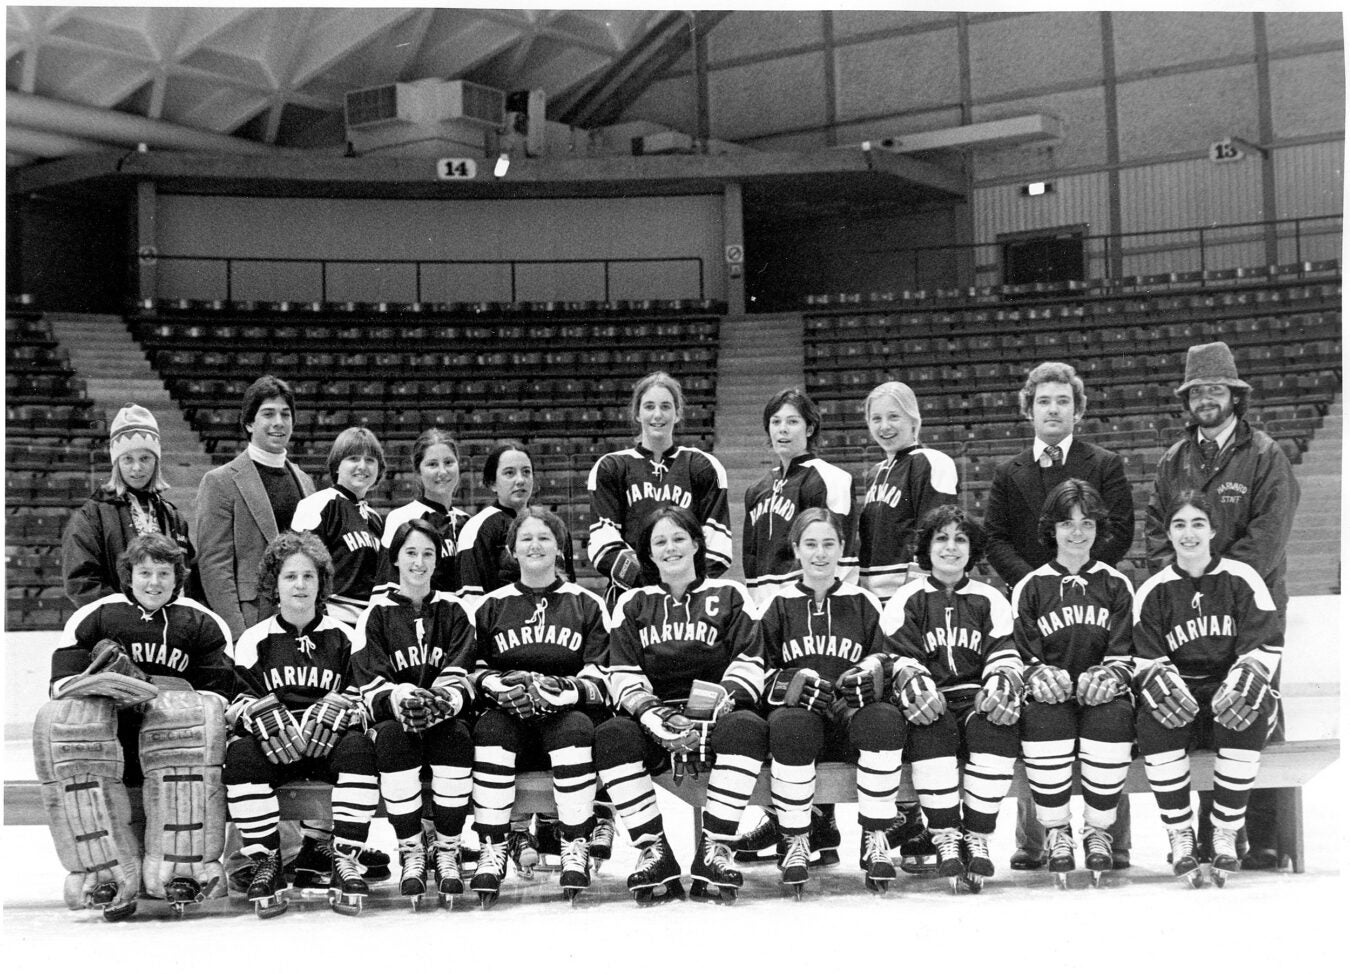 An old photo of the Harvard women's hockey team